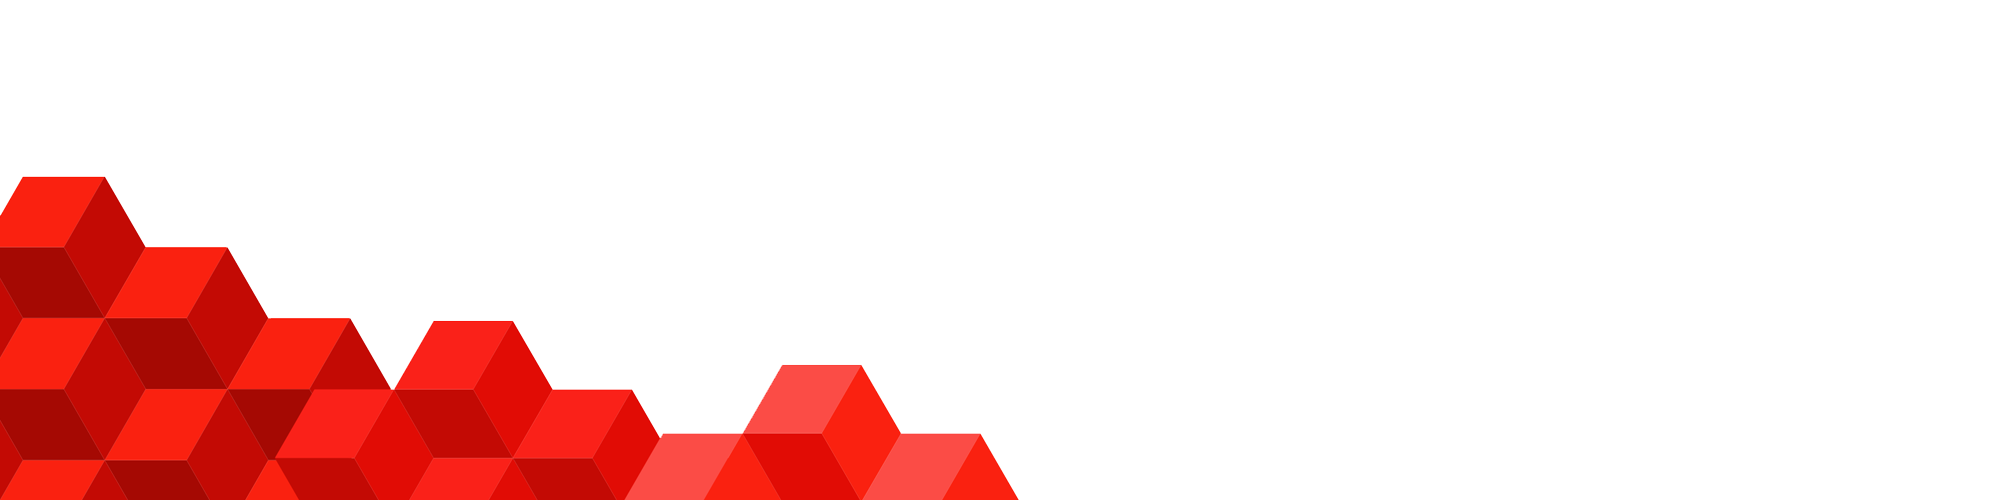 geometric red blocks pattern